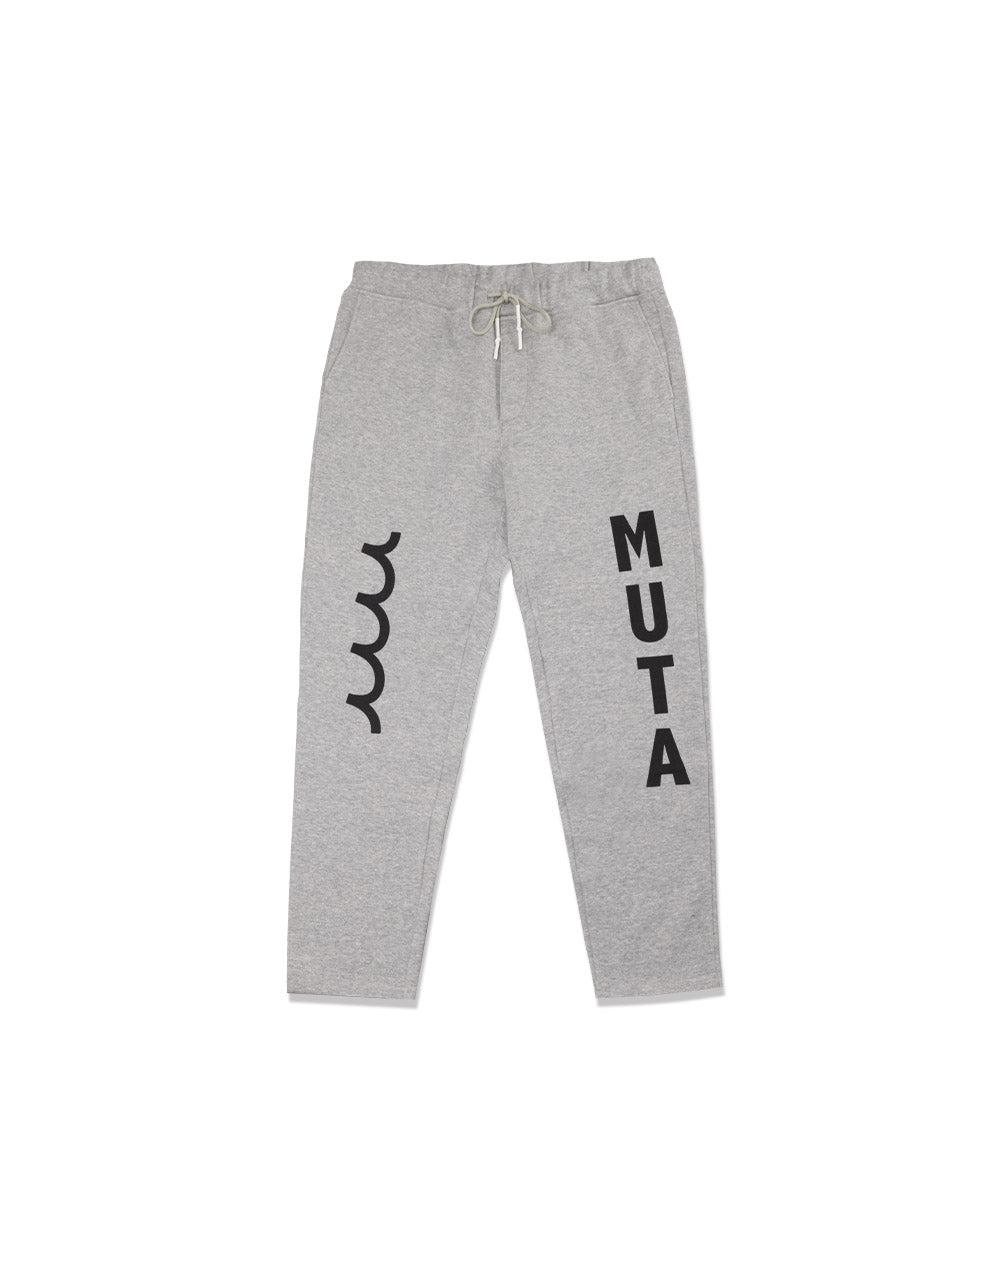 ACANTHUS x muta MARINE Narrow Sweatpants [全3色] – muta Online Store